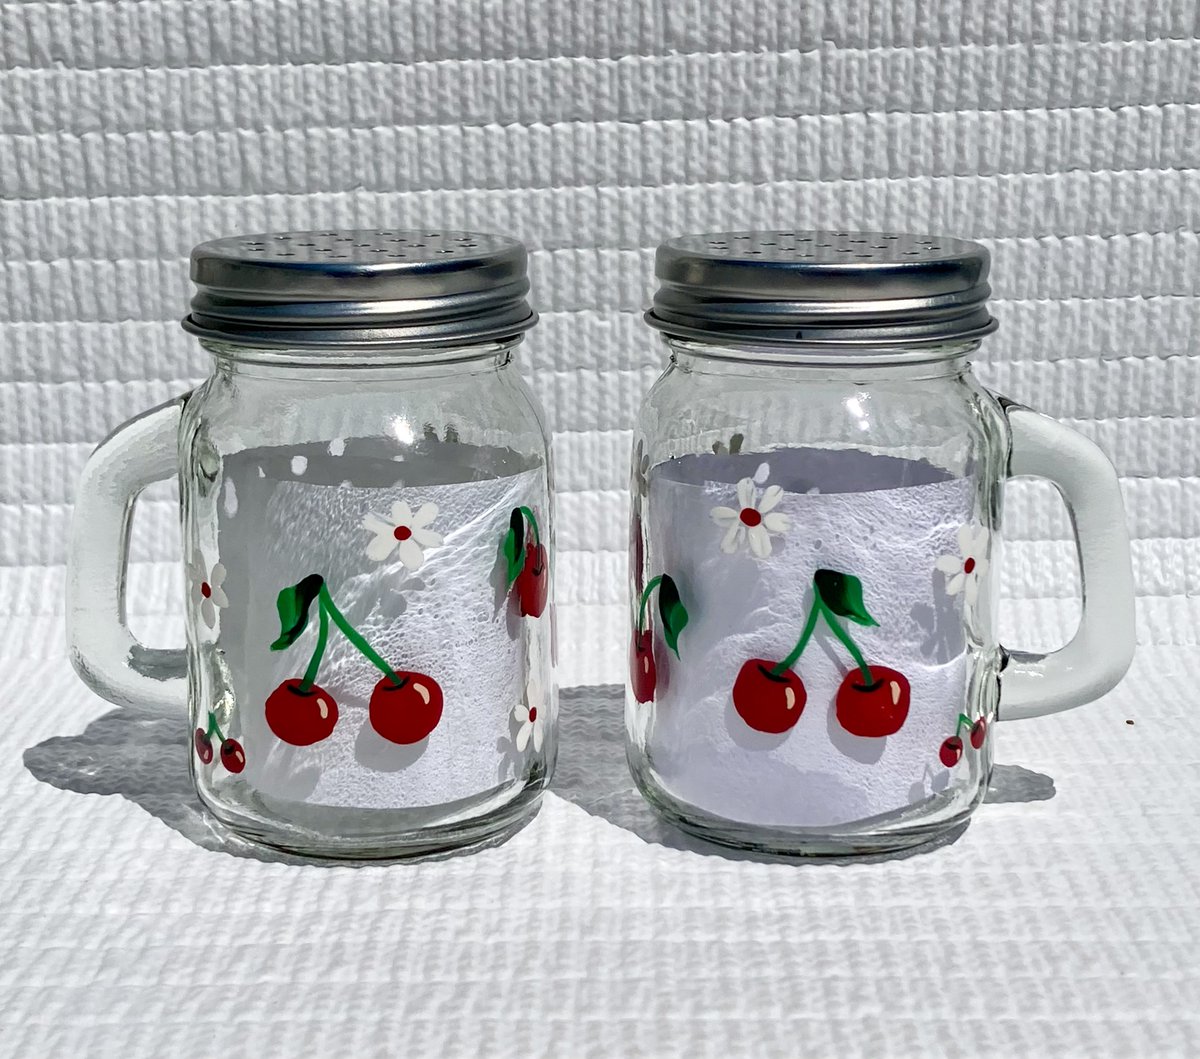 Cherry salt and pepper shakers etsy.com/listing/172705… #cherrydecor #saltshaker #homedecor #SMILEtt23 #etsy #CraftBizParty #etsyshop